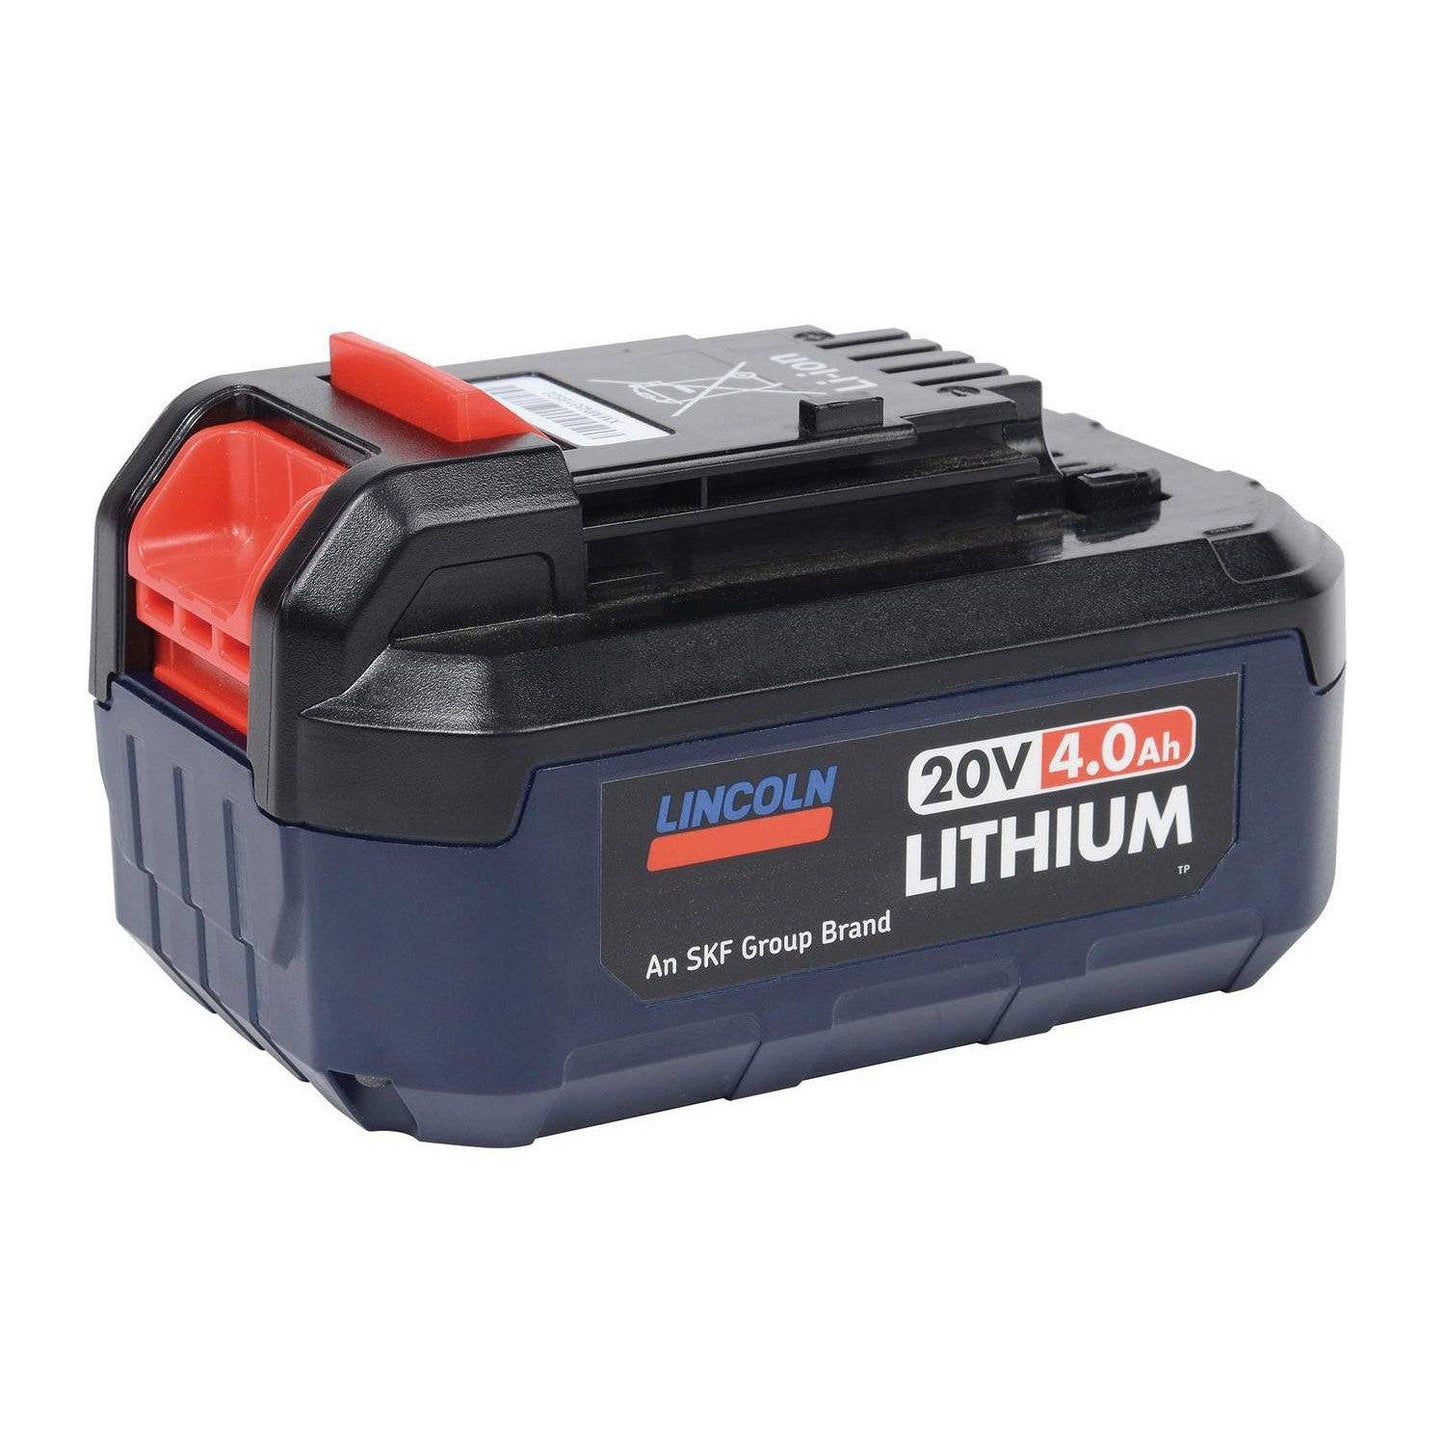 20 V Li Ion Battery 4.0 Ah - Lincoln Industrial